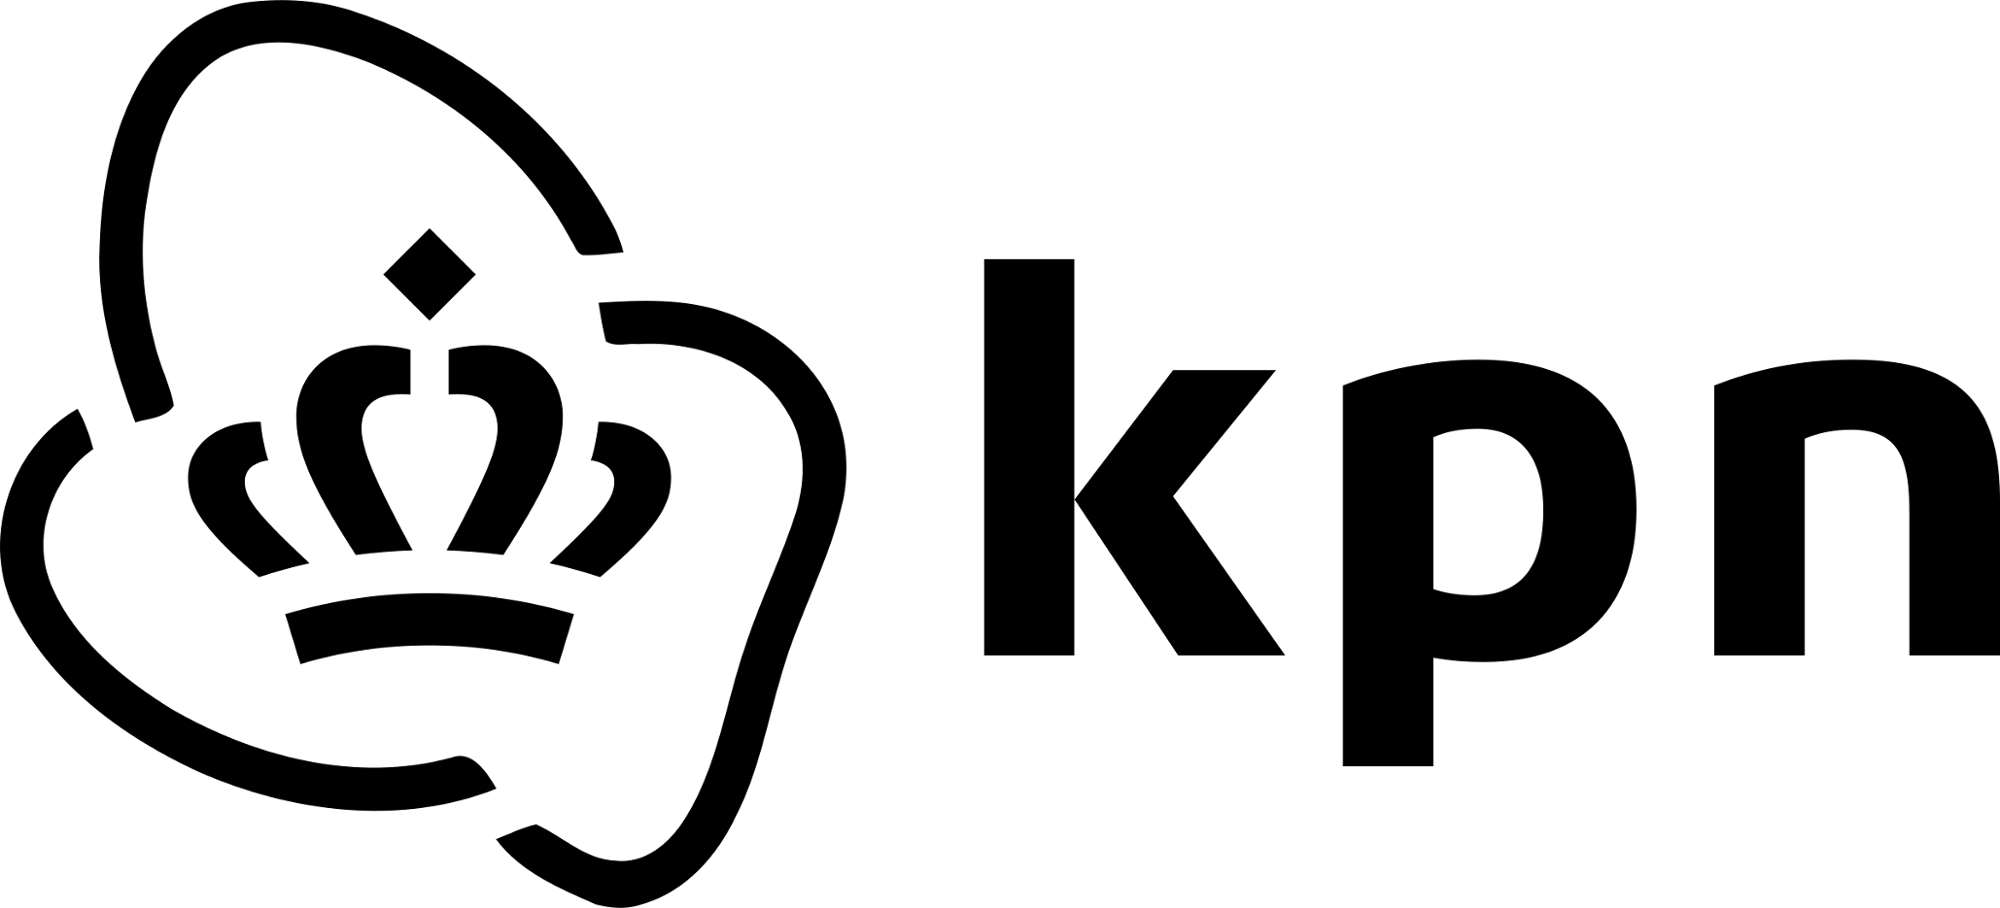 KPN logo zwart wit-1-1